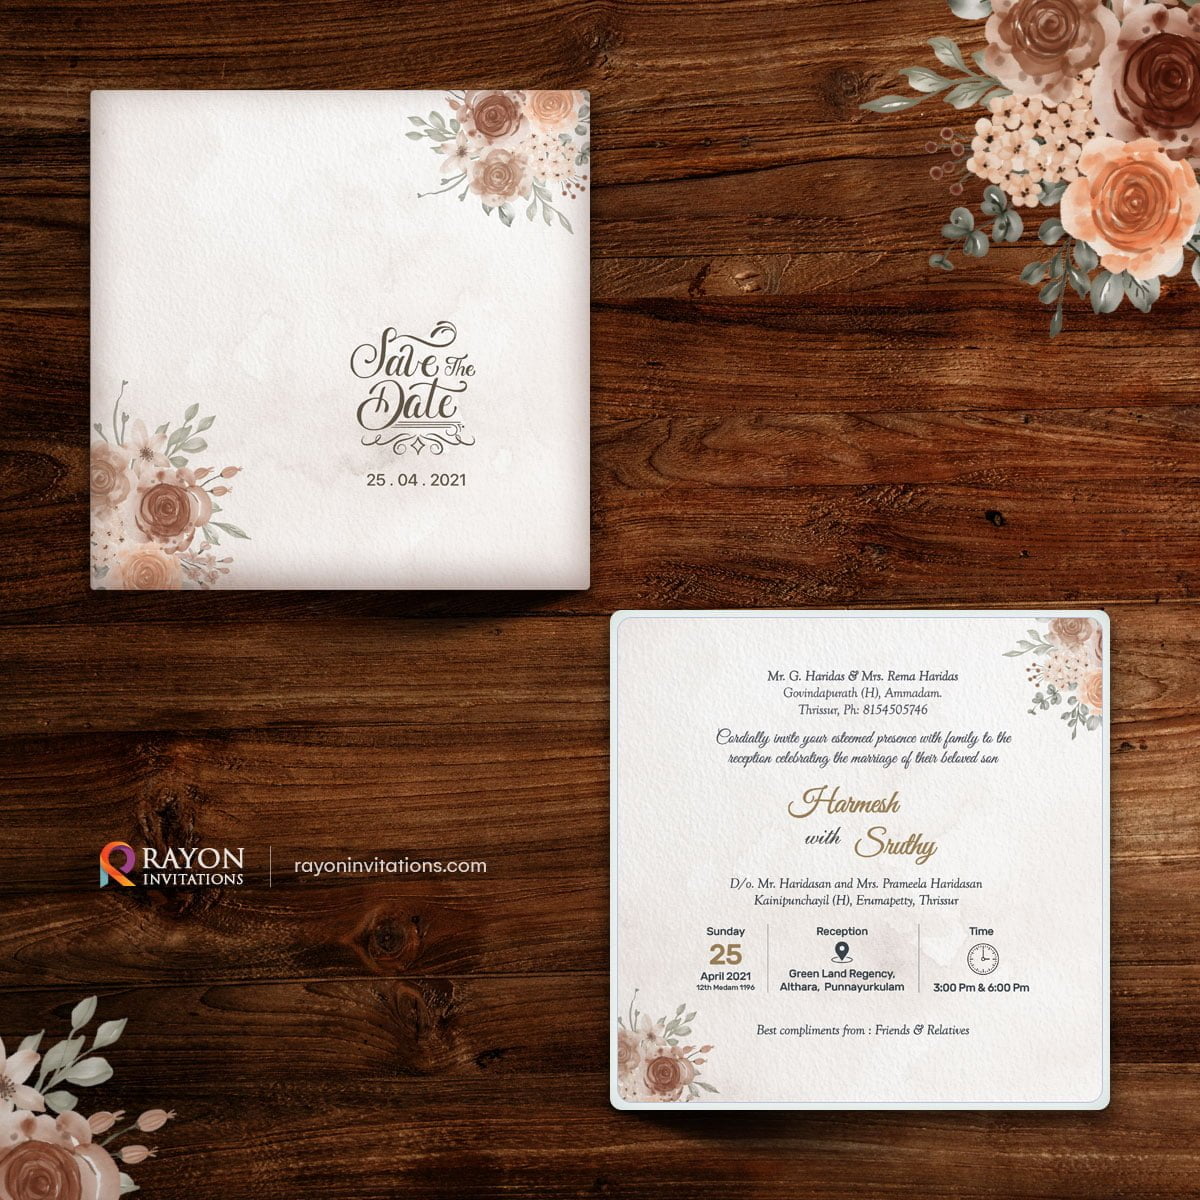 Wedding Invitation Cards Bihar